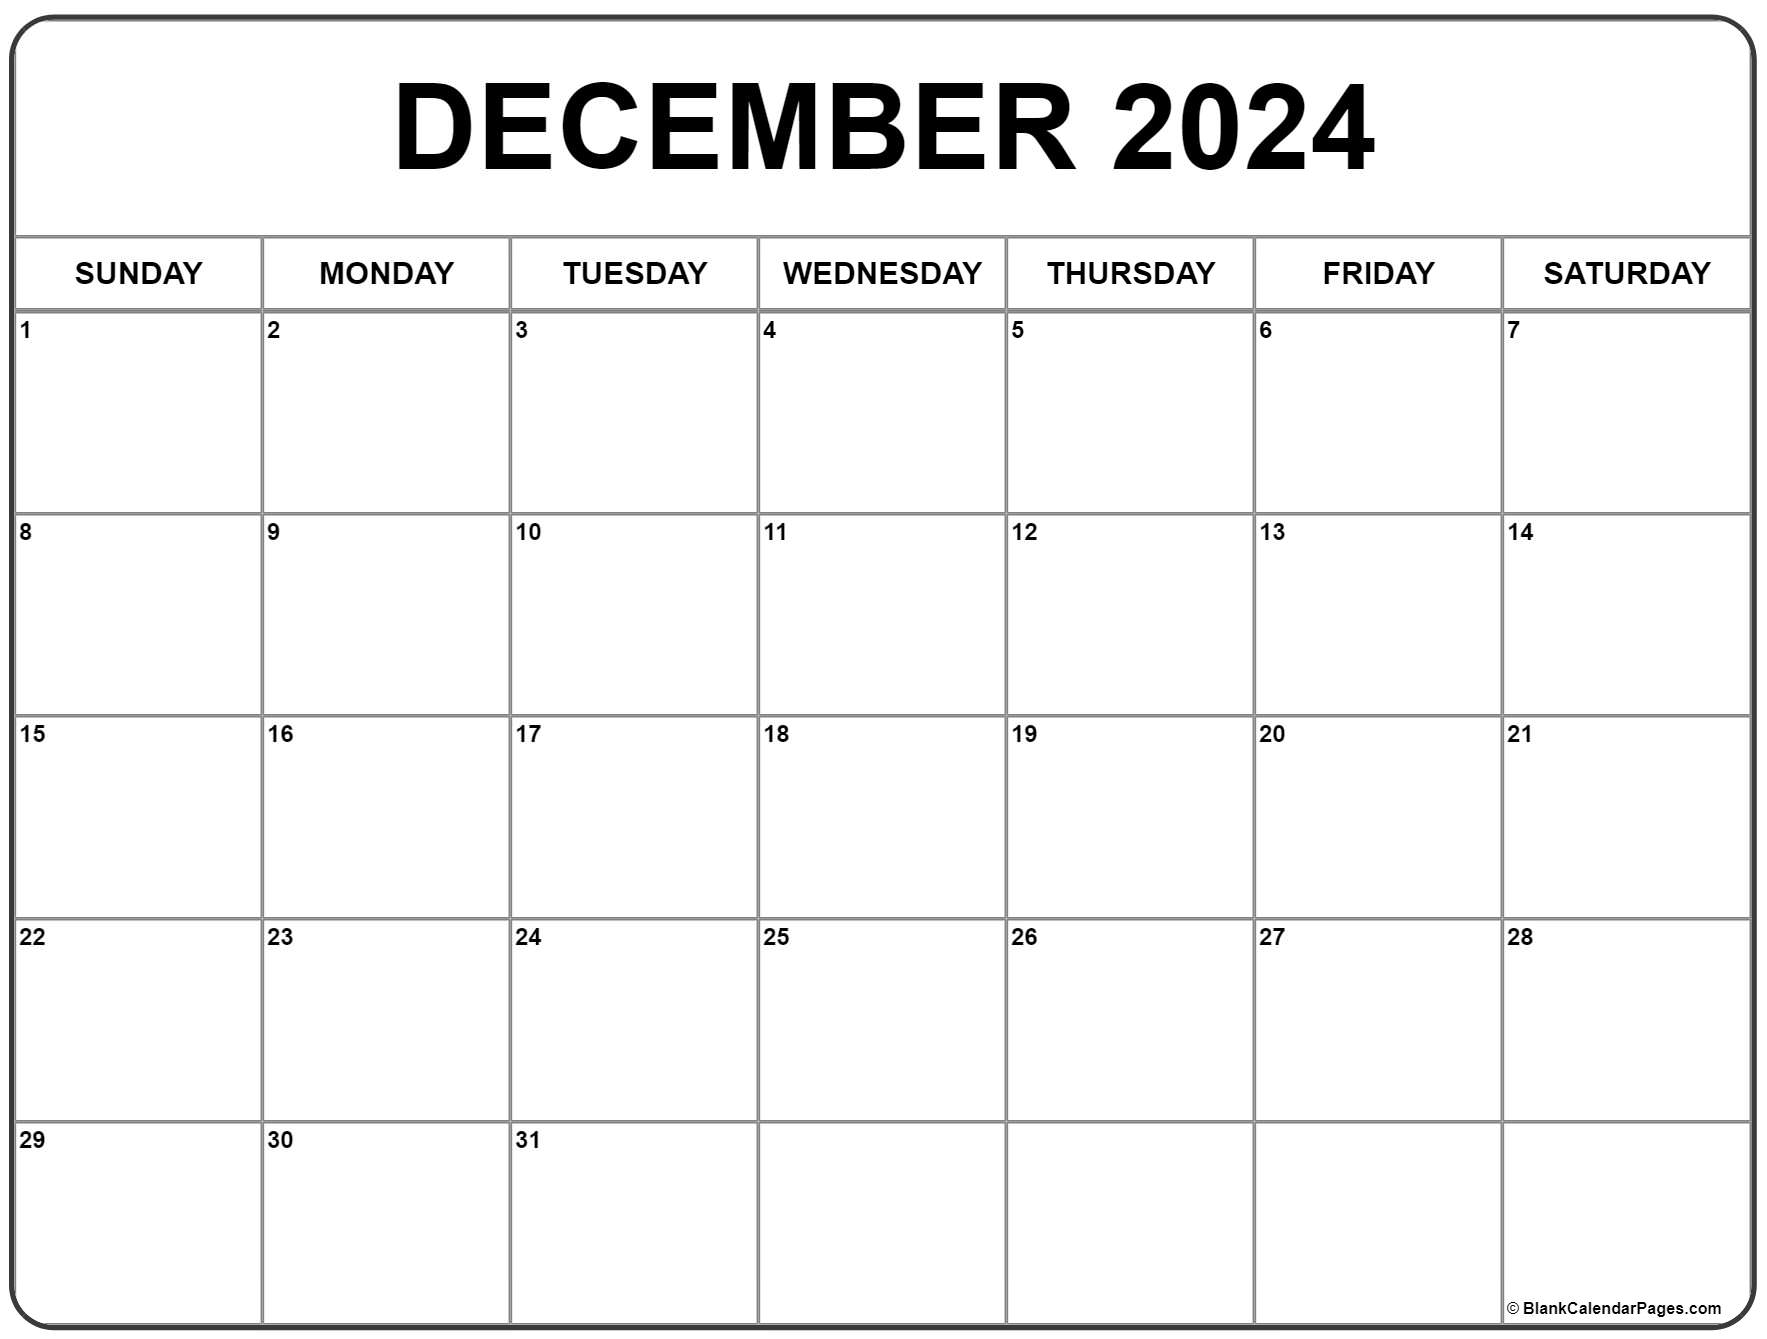 November And December 2022 Calendar December 2022 Calendar | Free Printable Calendar Templates